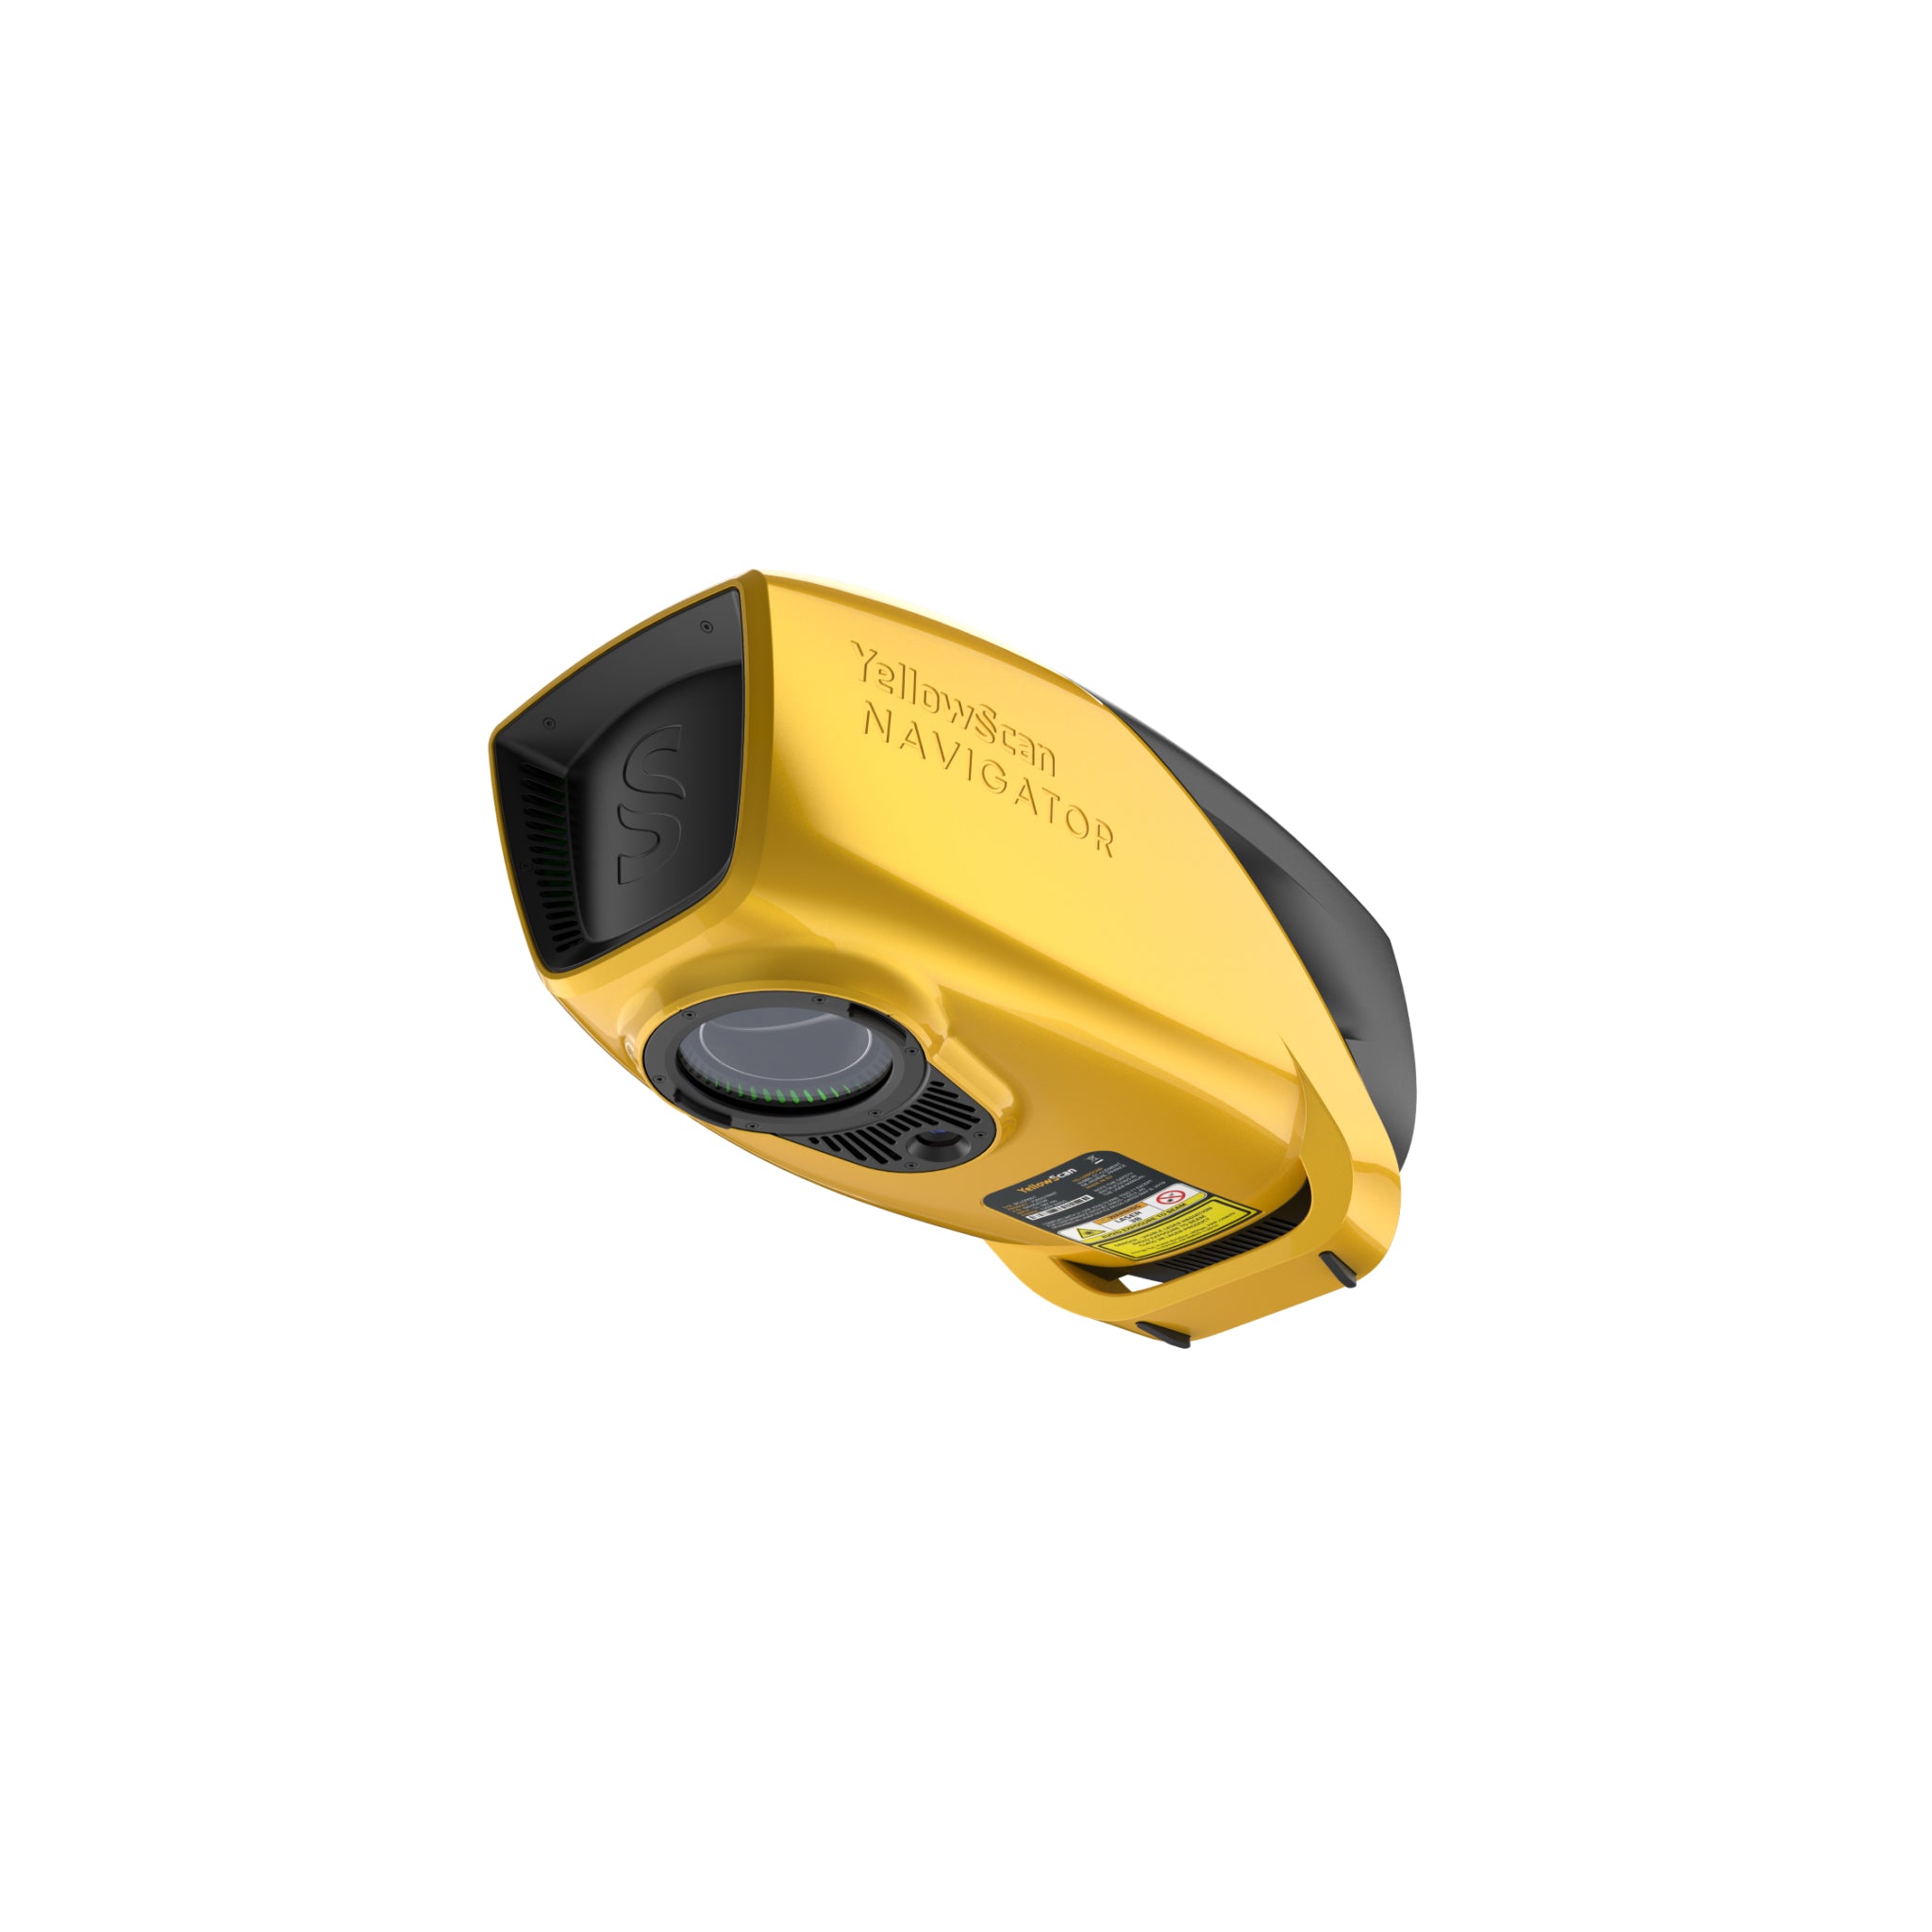 YellowScan Navigator Bathymetric LiDAR Scanner